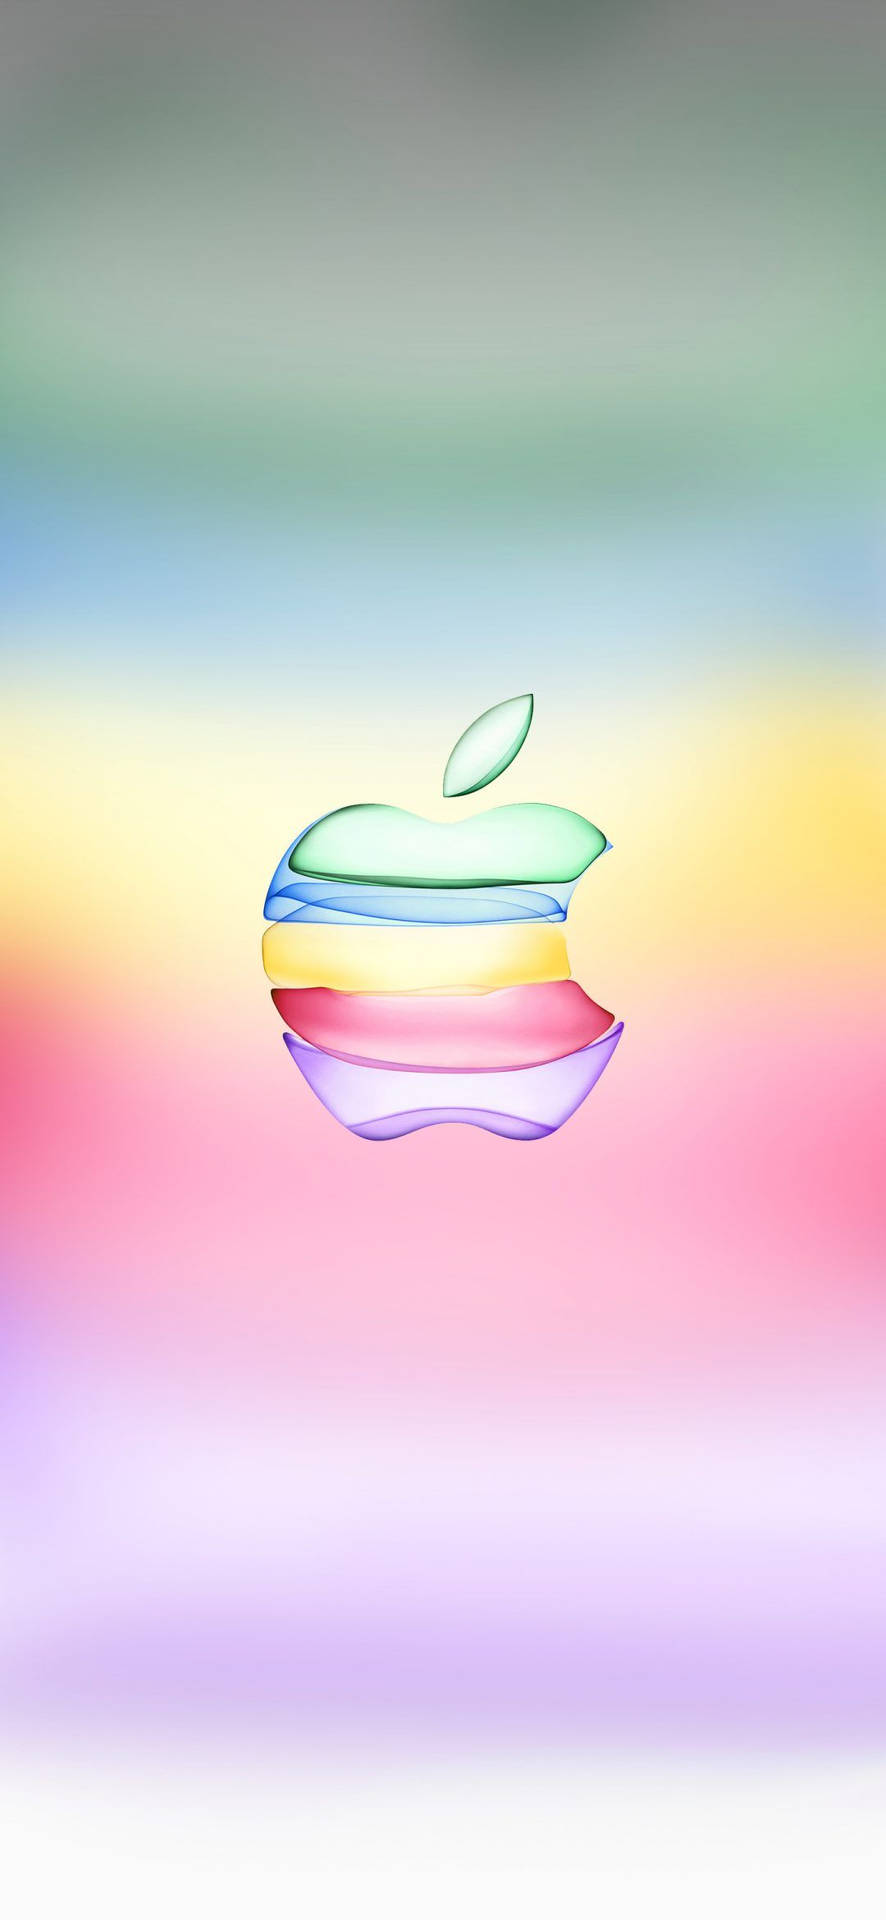 Apple Logo Iphone 11 Pro Max